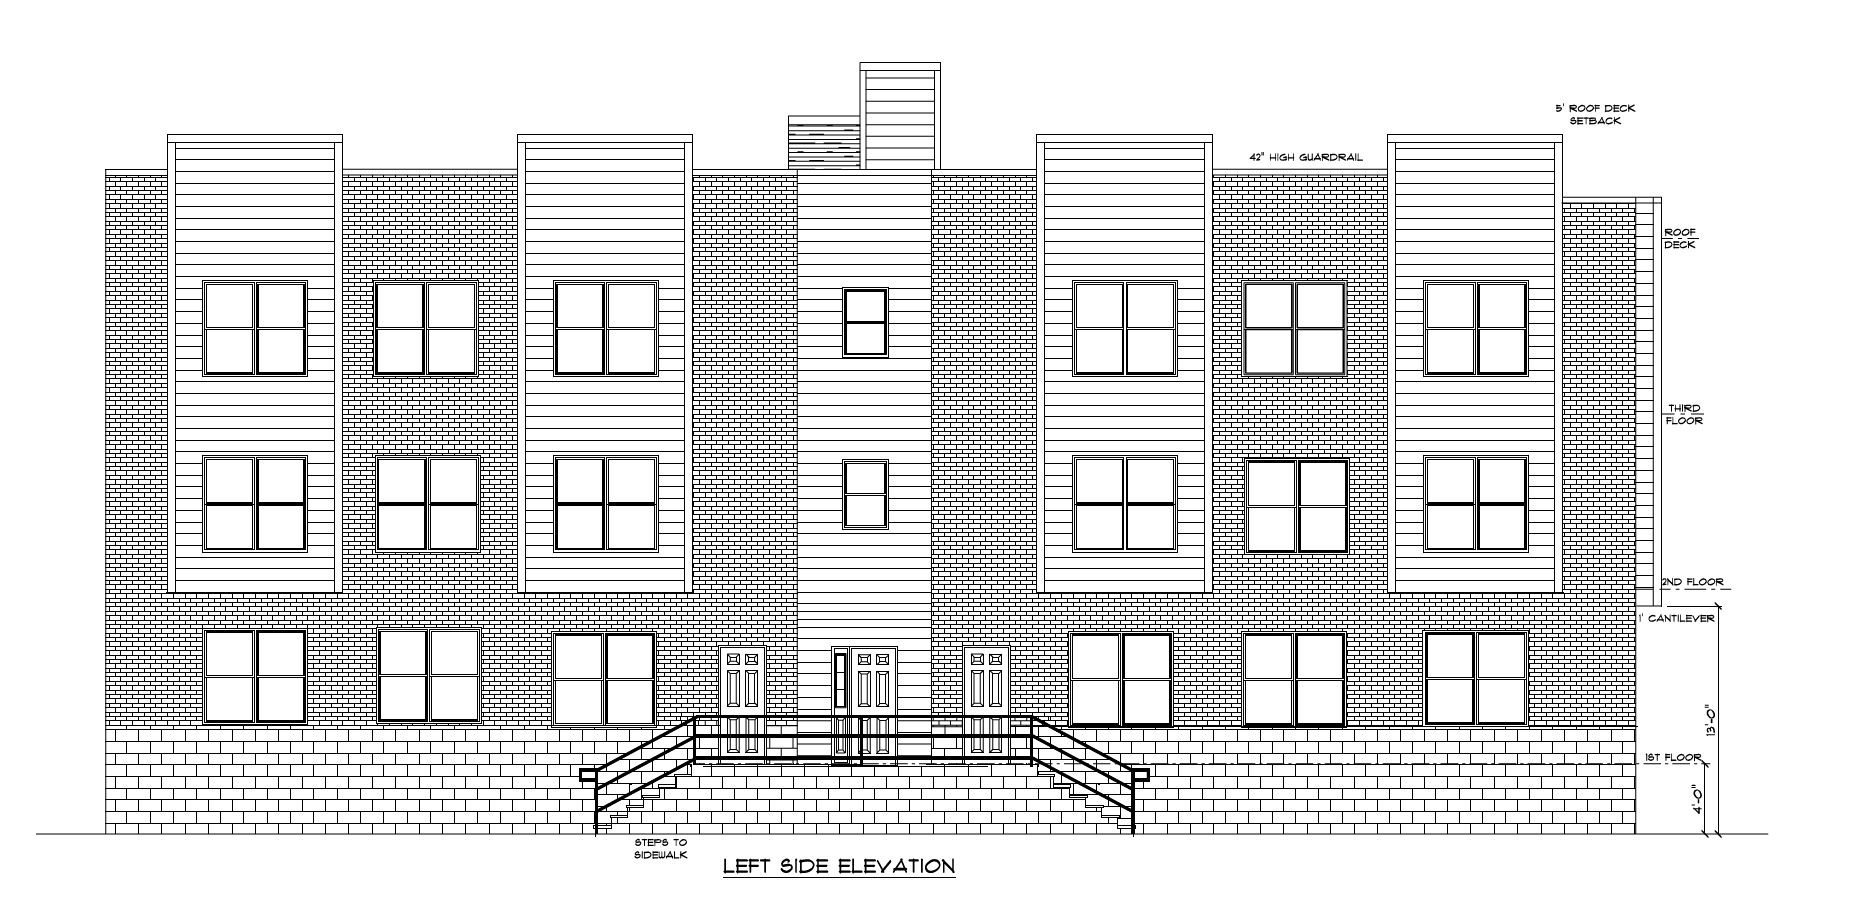 1700 Master Street. Building elevation. Credit: Here's The Plan, LLC via the City of Philadelphia